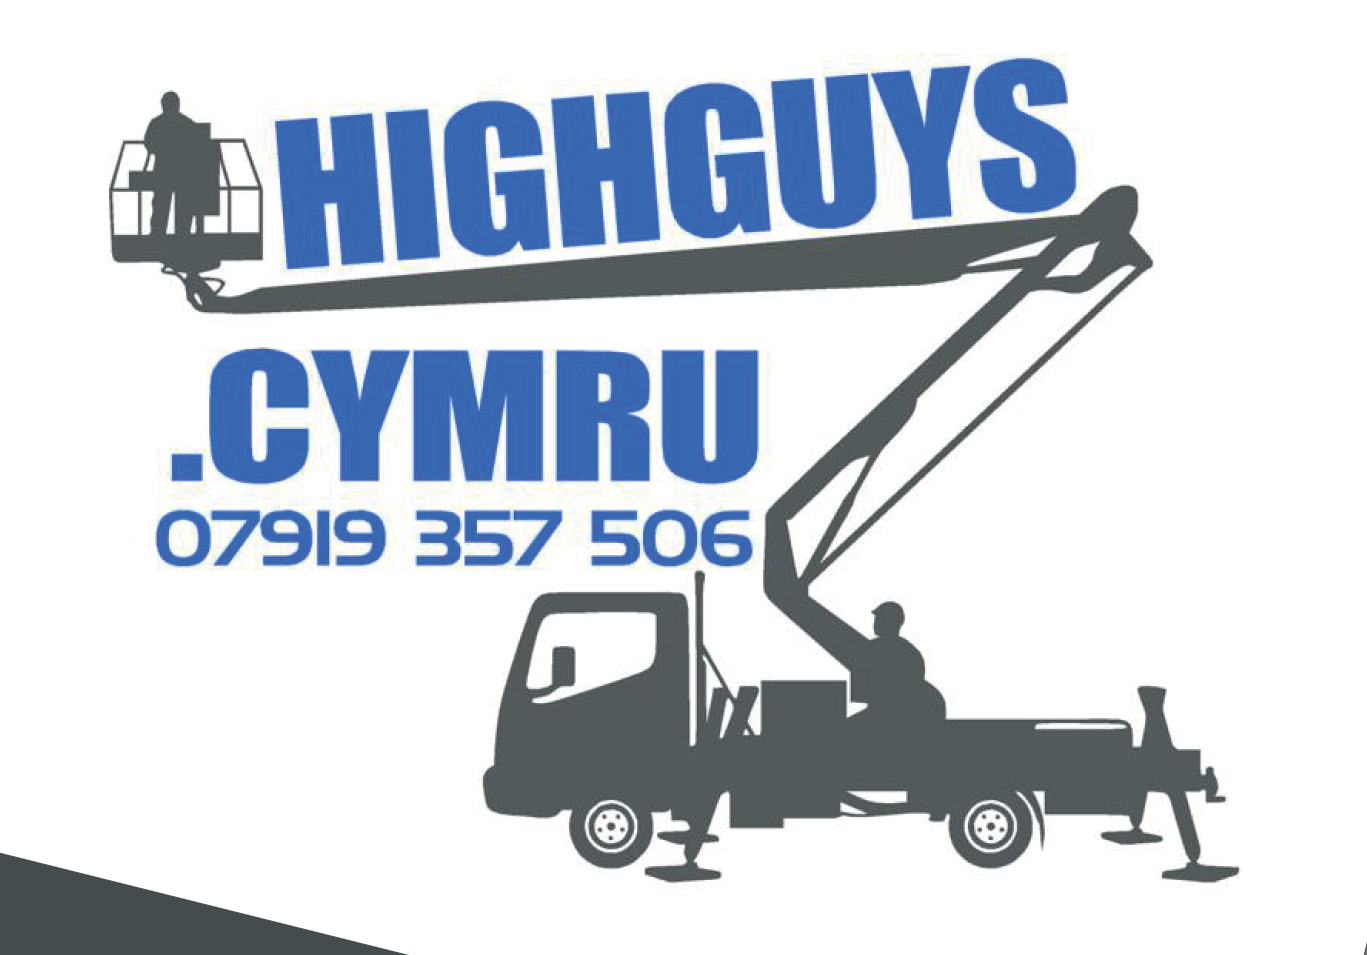 High Guys Cymru logo